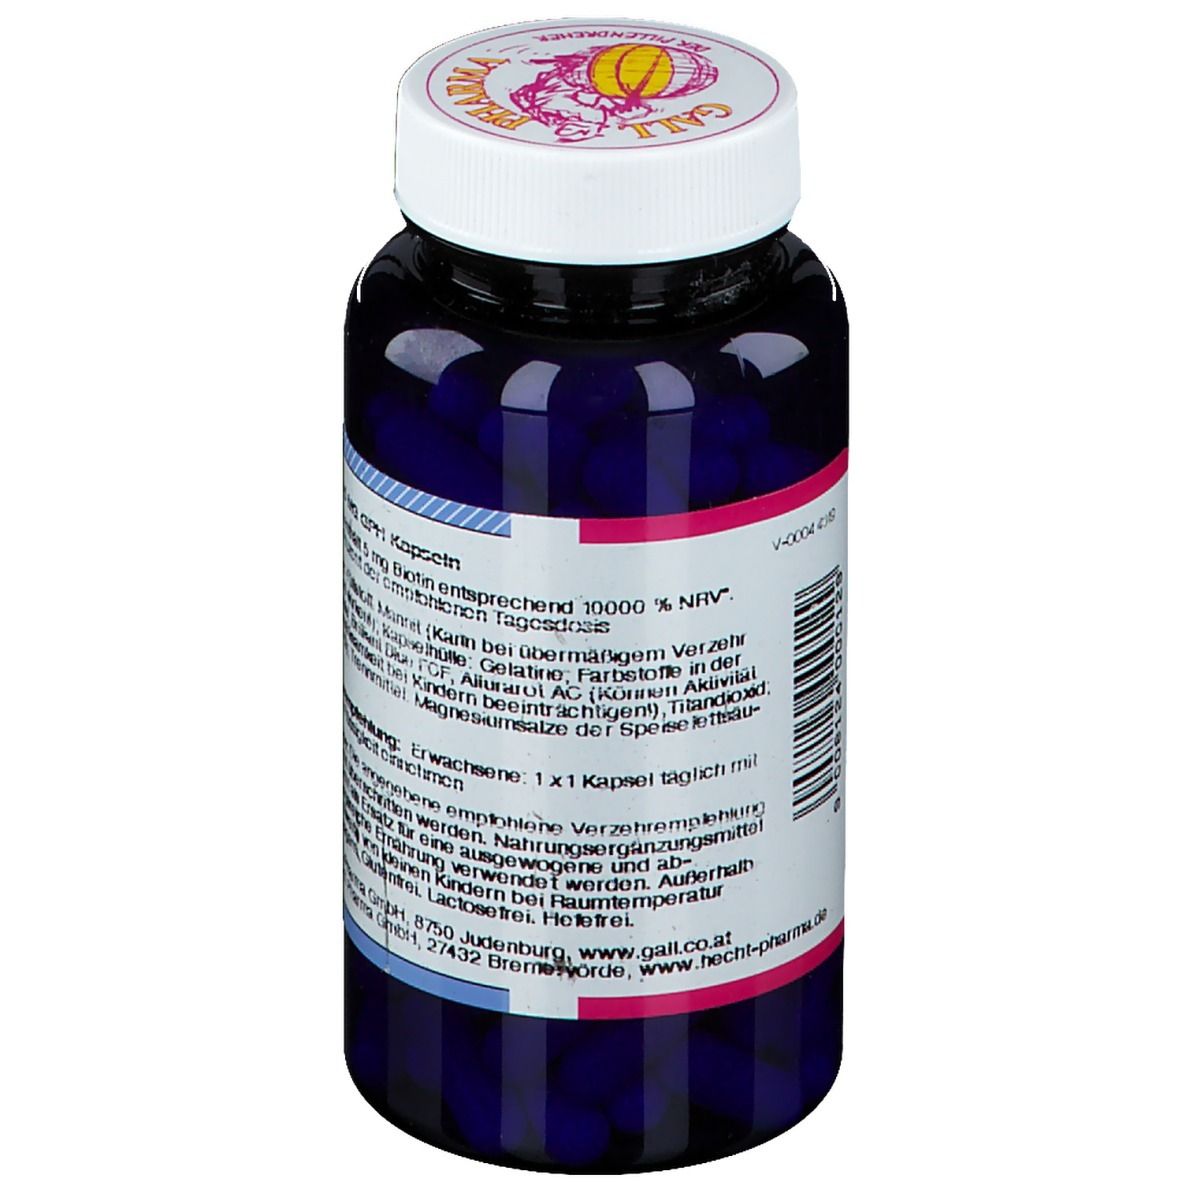 GALL PHARMA Biotin 5 mg